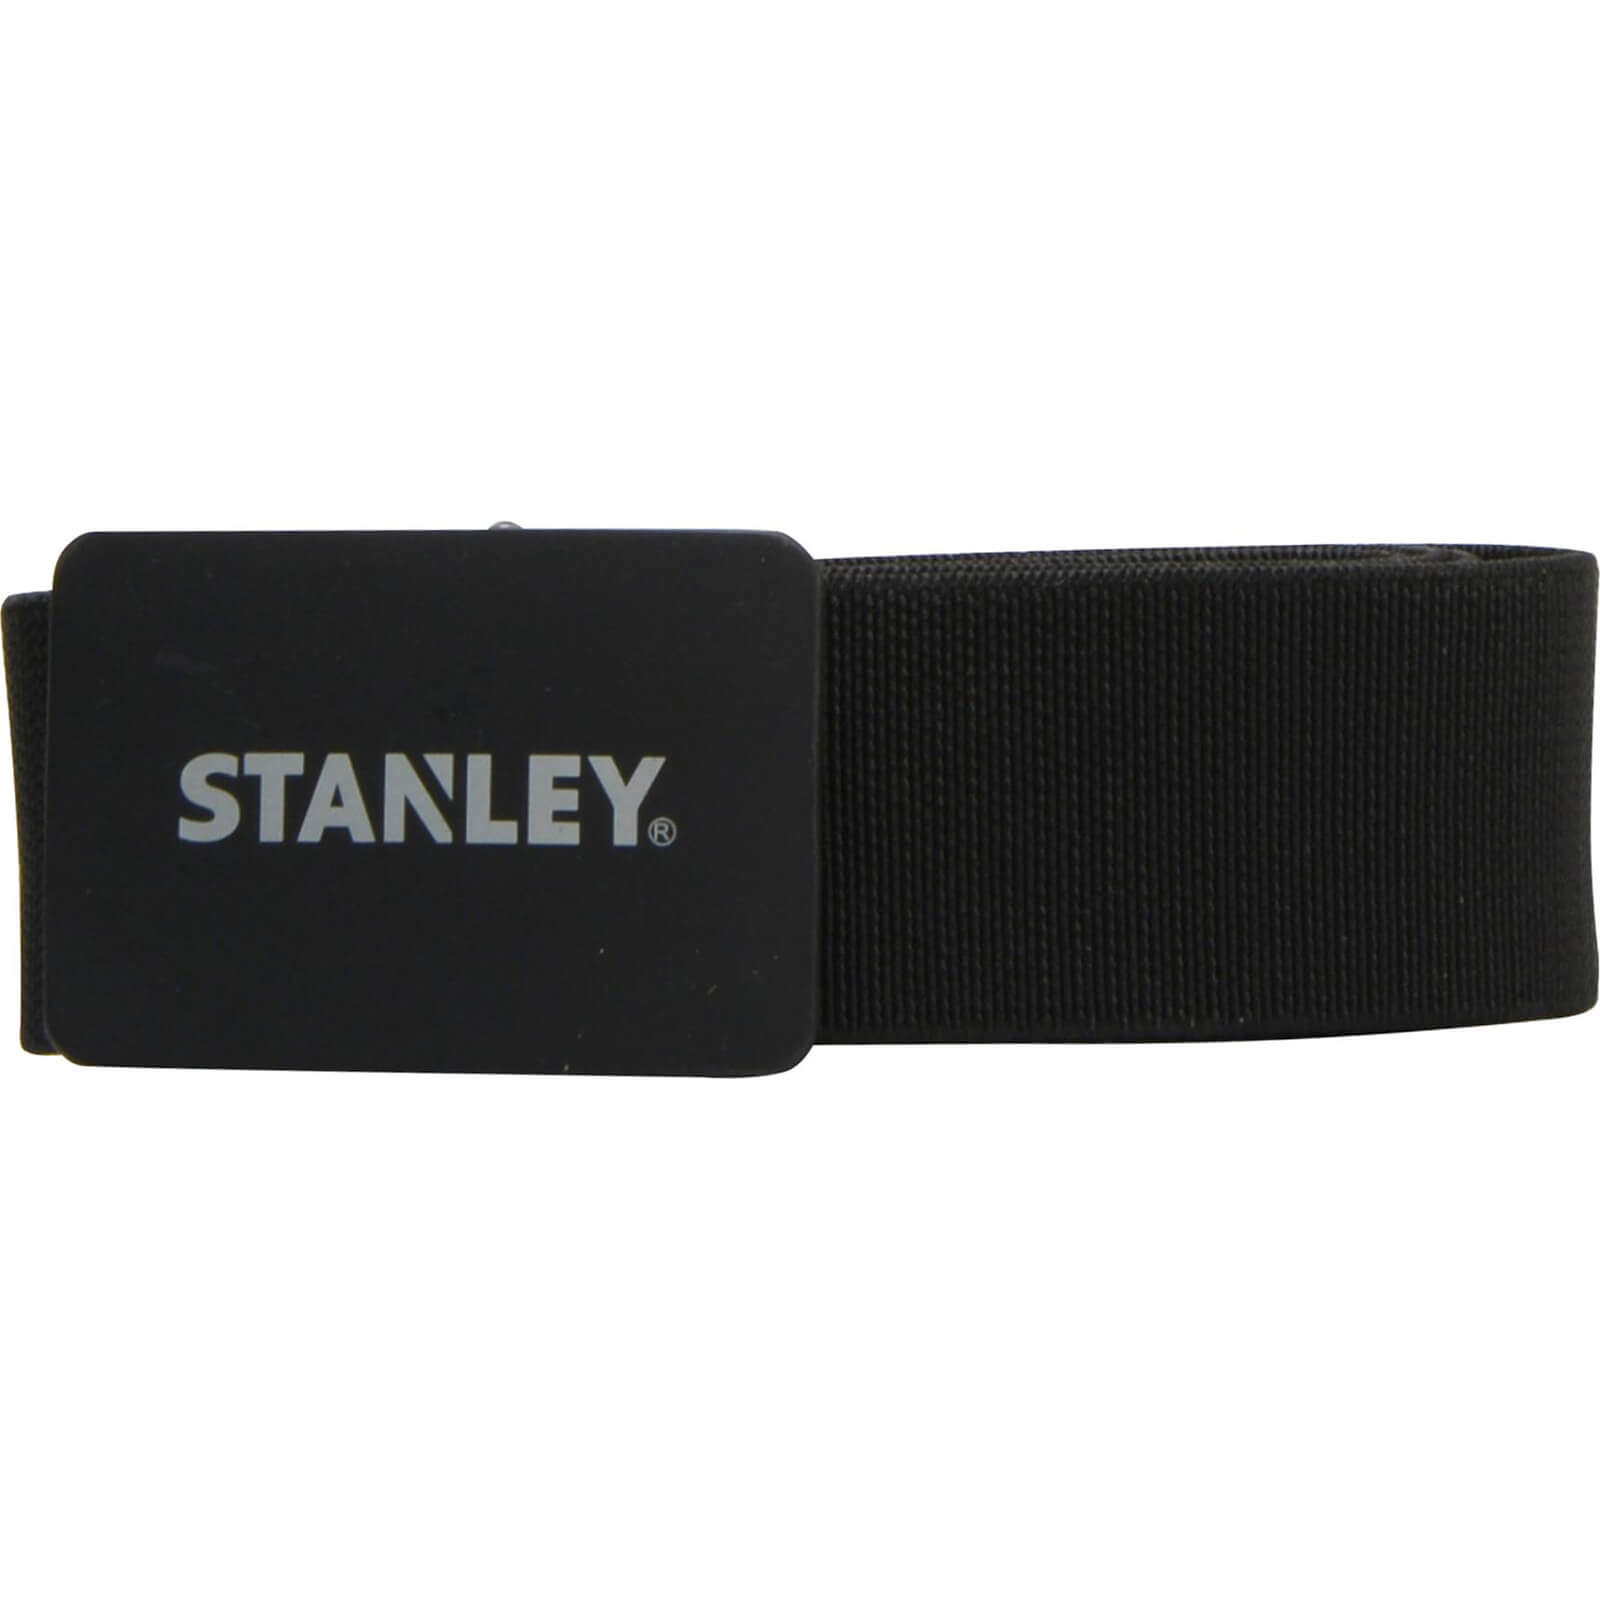 Image of Stanley Elasticated Work Belt Black One Size